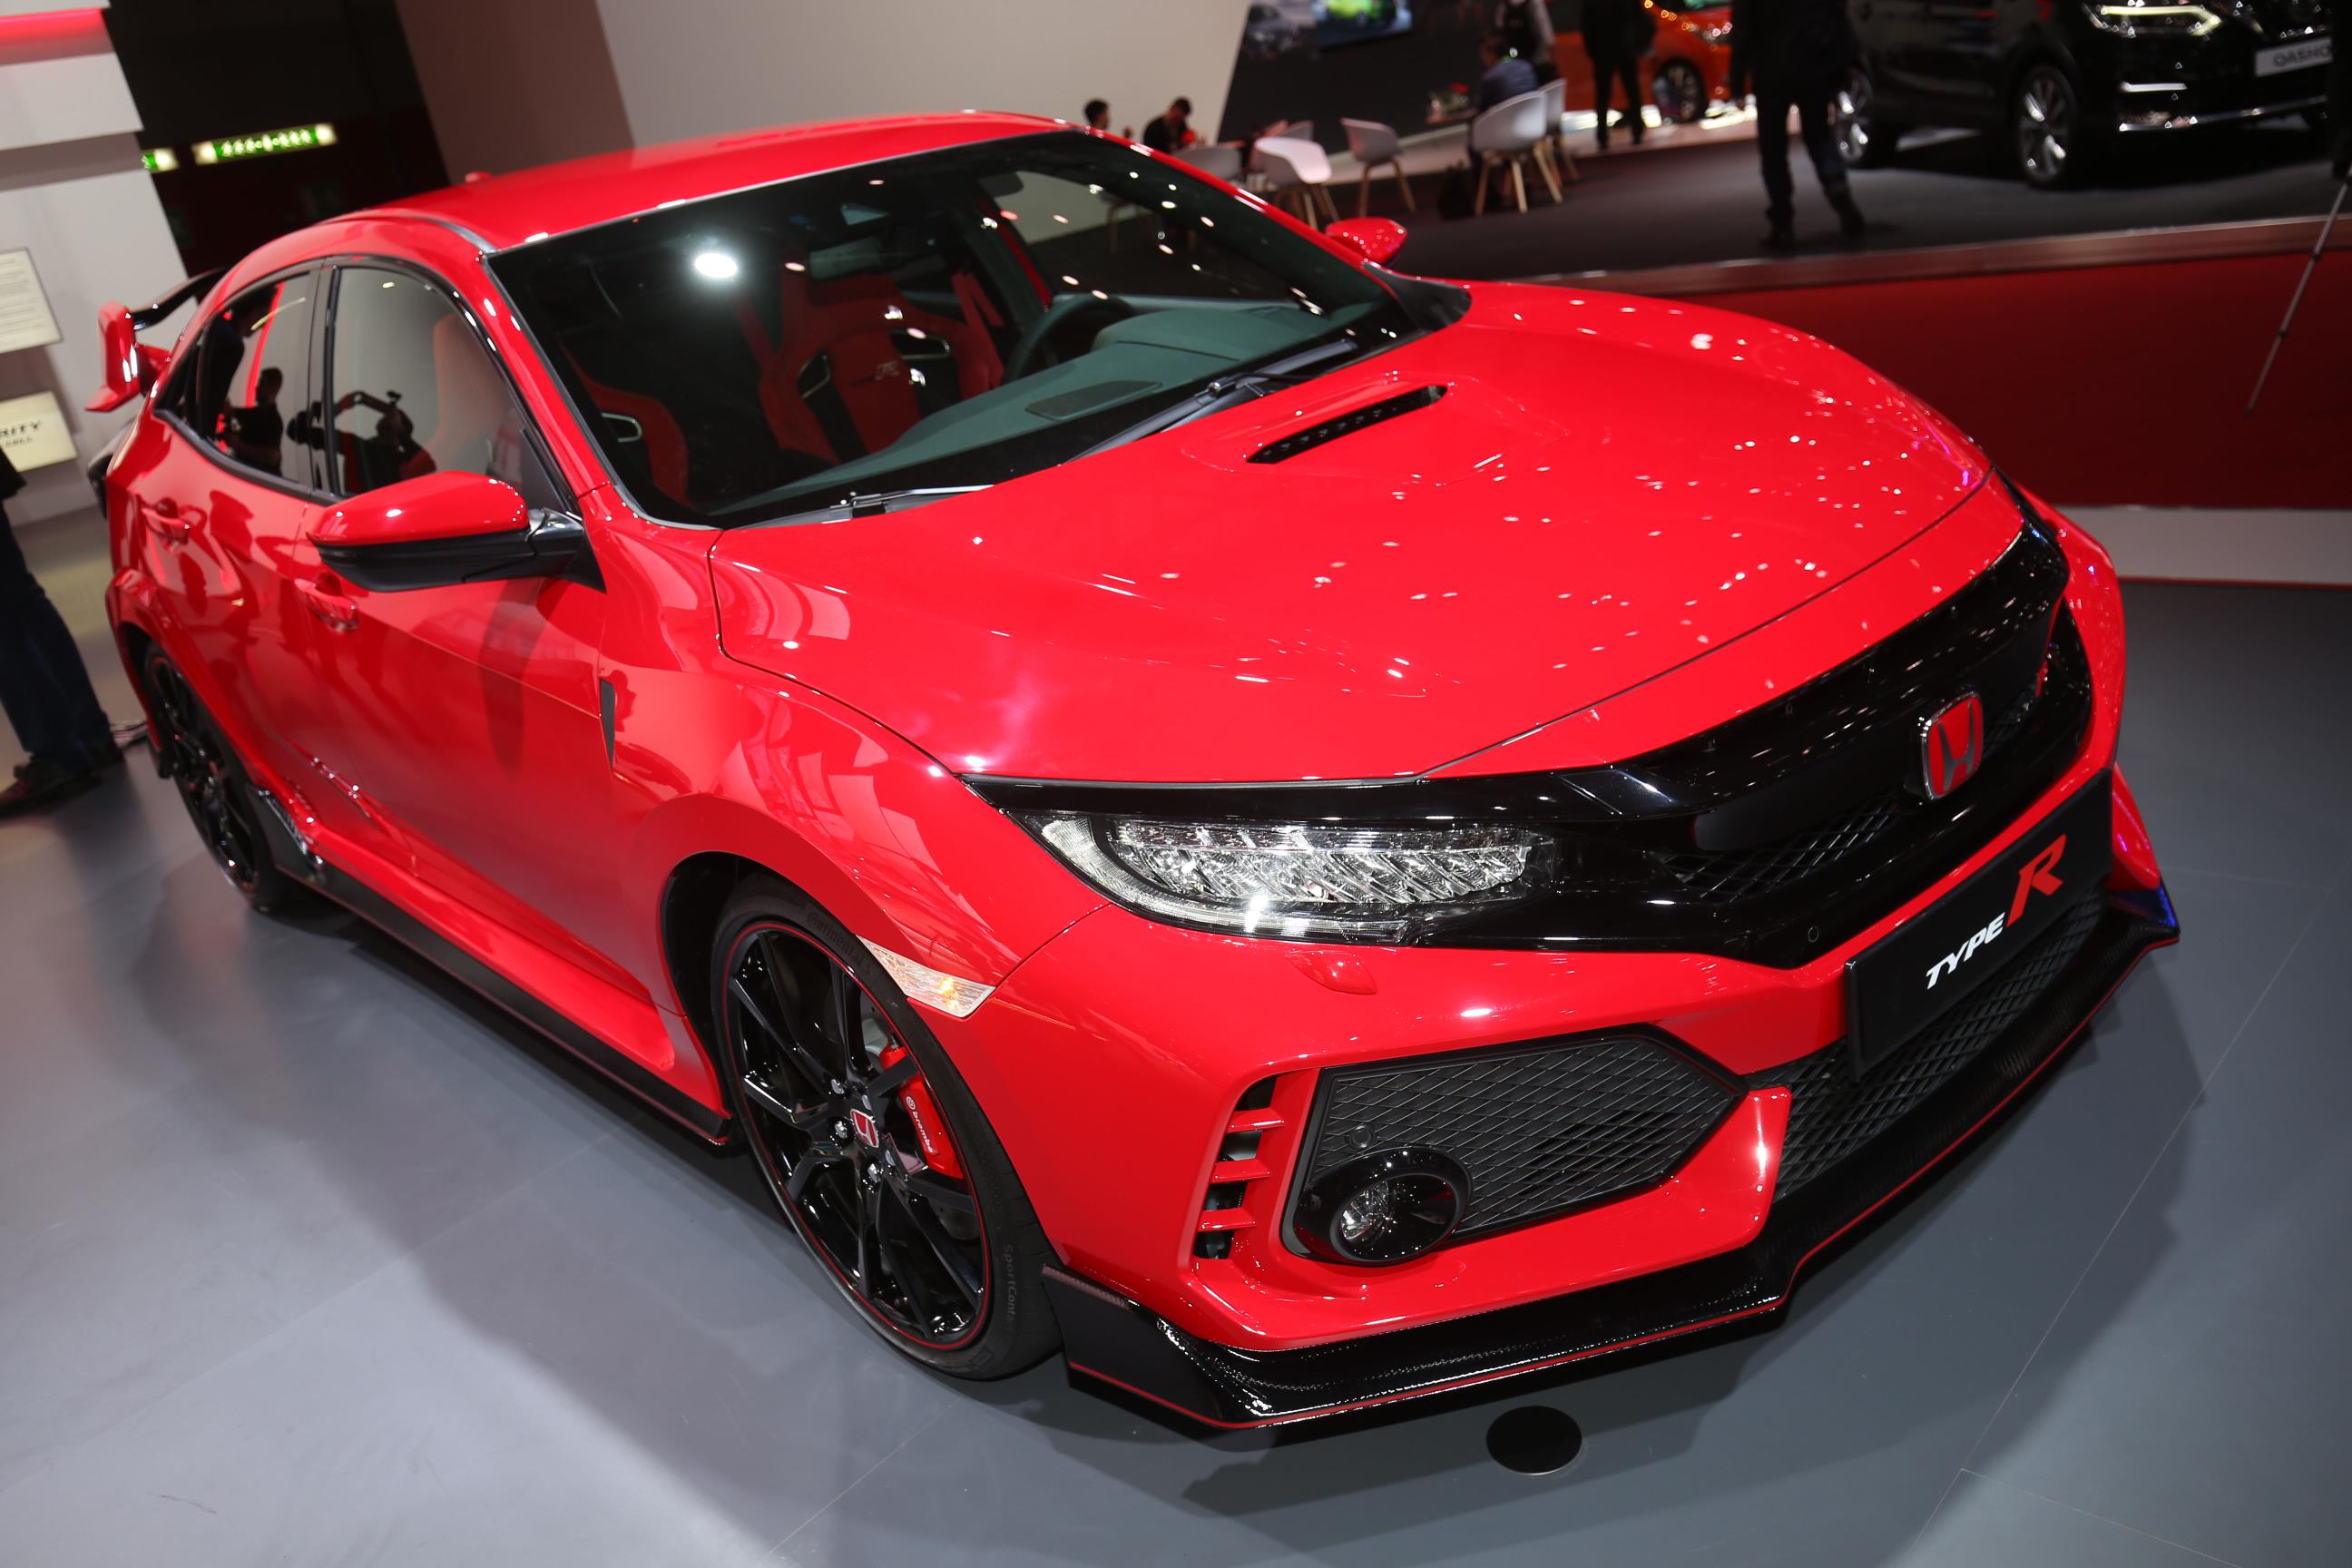 2018 Honda Civic Type R Makes Production Debut in Geneva